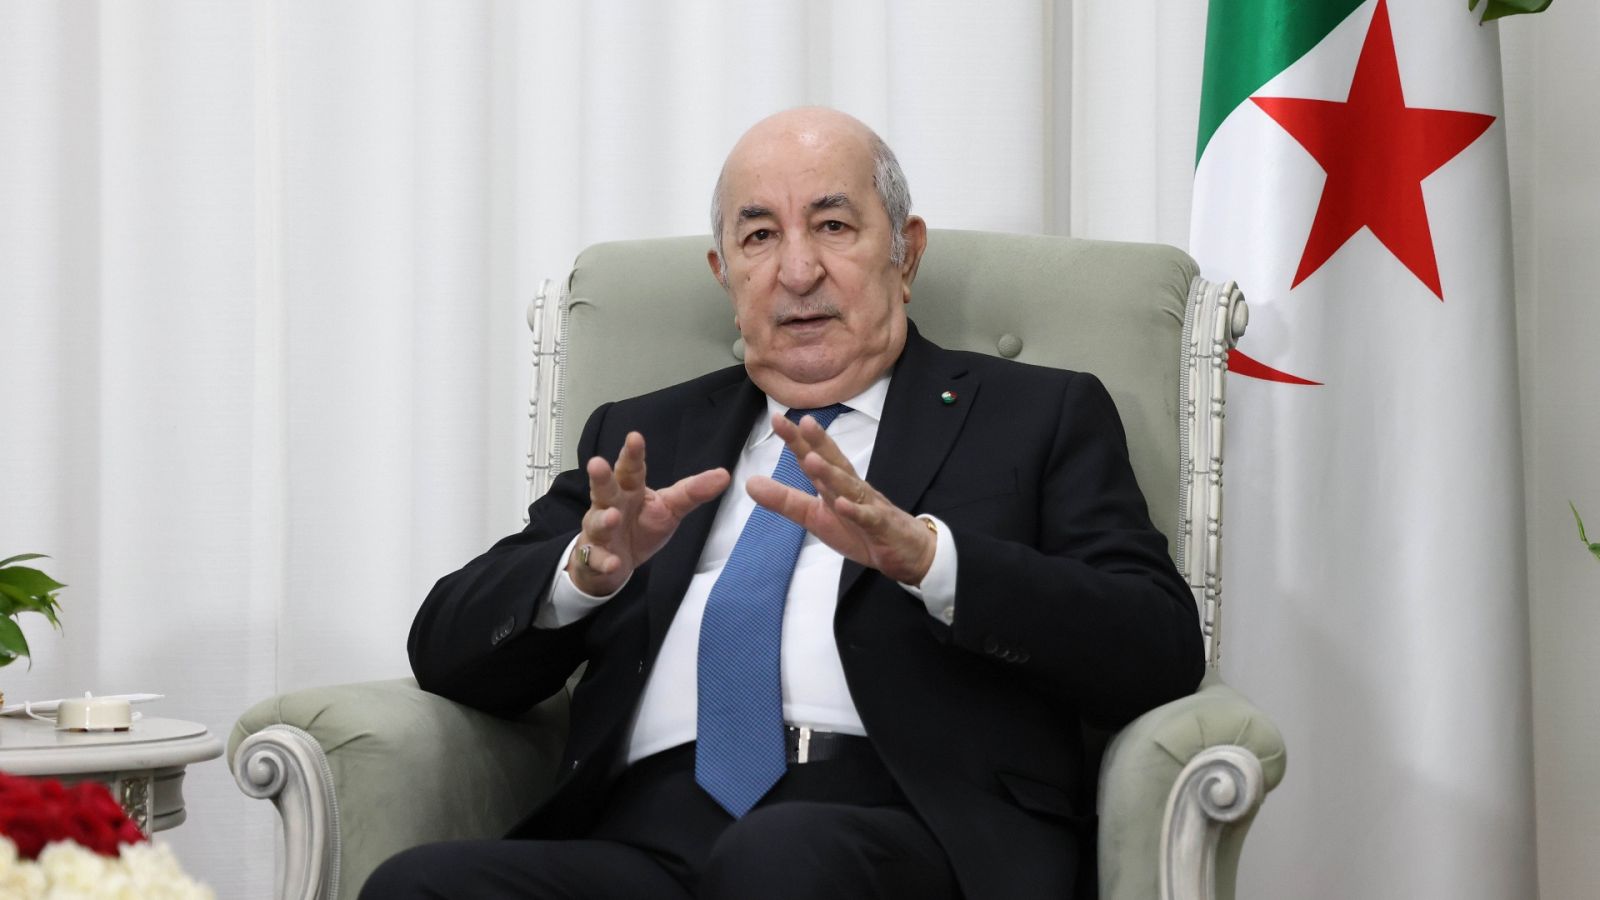 El presidente de Argelia no ve avances diplomáticos con España